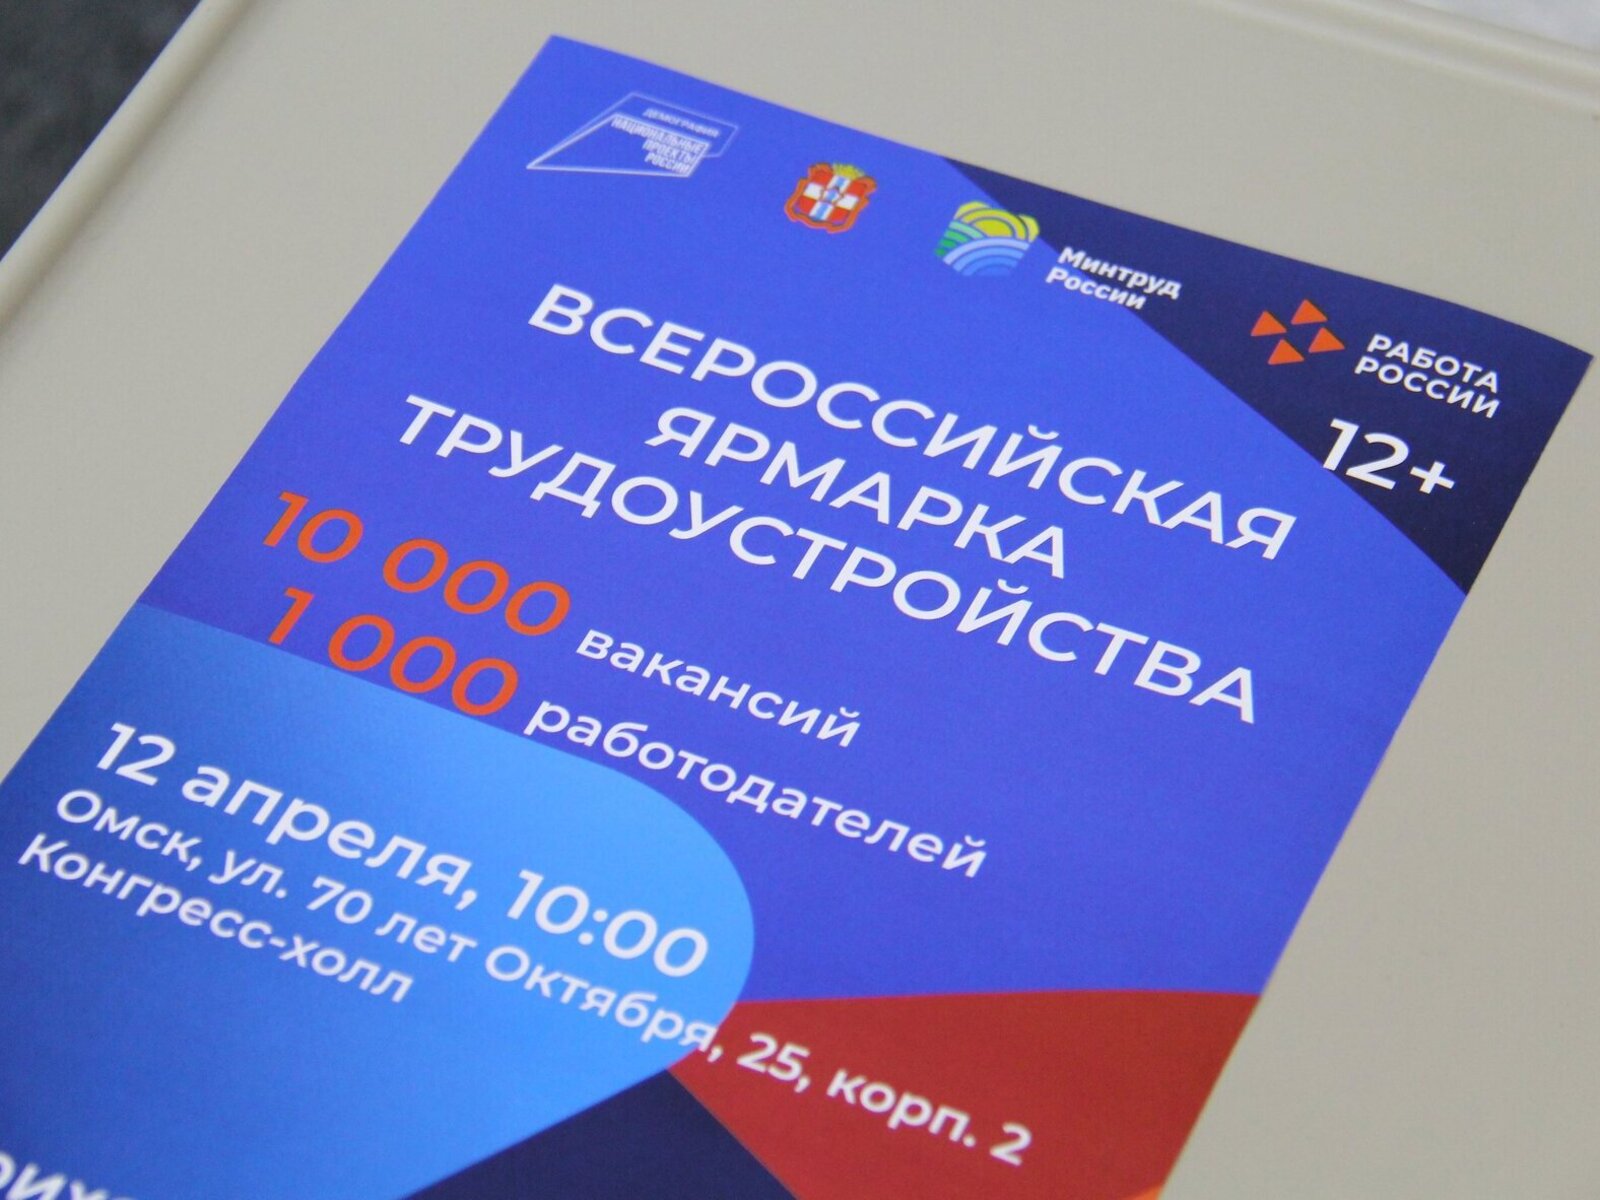 УДХБ и пассажирские предприятия Омска представят свои вакансии на всероссийской ярмарке трудоустройства.